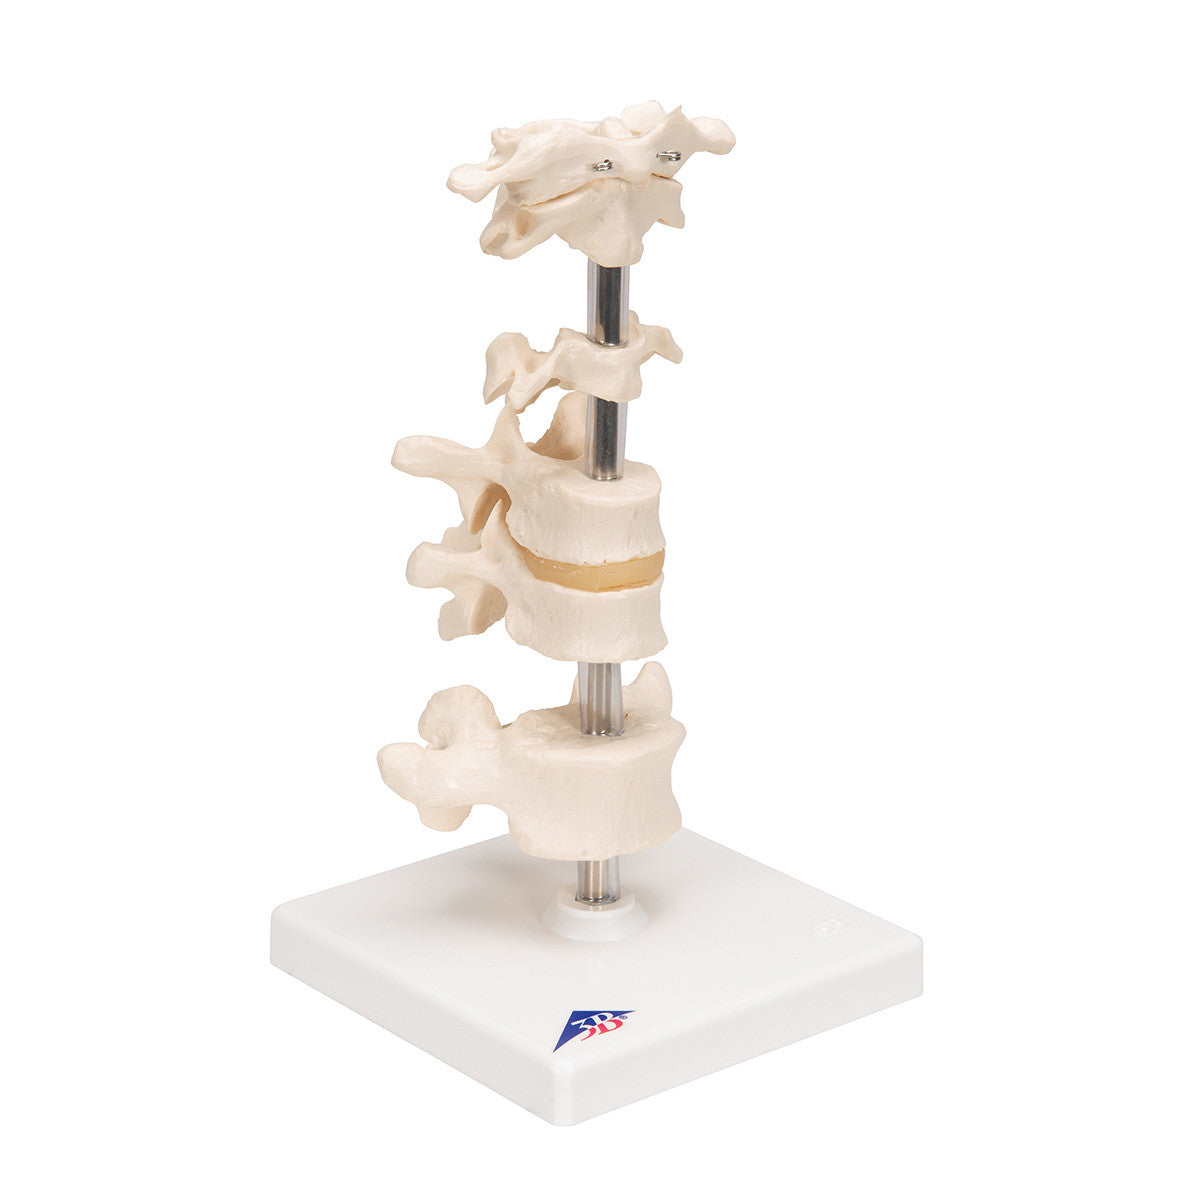 a75_02_1200_1200_model-of-6-human-vertebrae-mounted-on-stand-atlas-axis-cervical-2x-thoracic-lumbar-3b-smart-anatomy__29676.1589752920.1280.1280.jpg